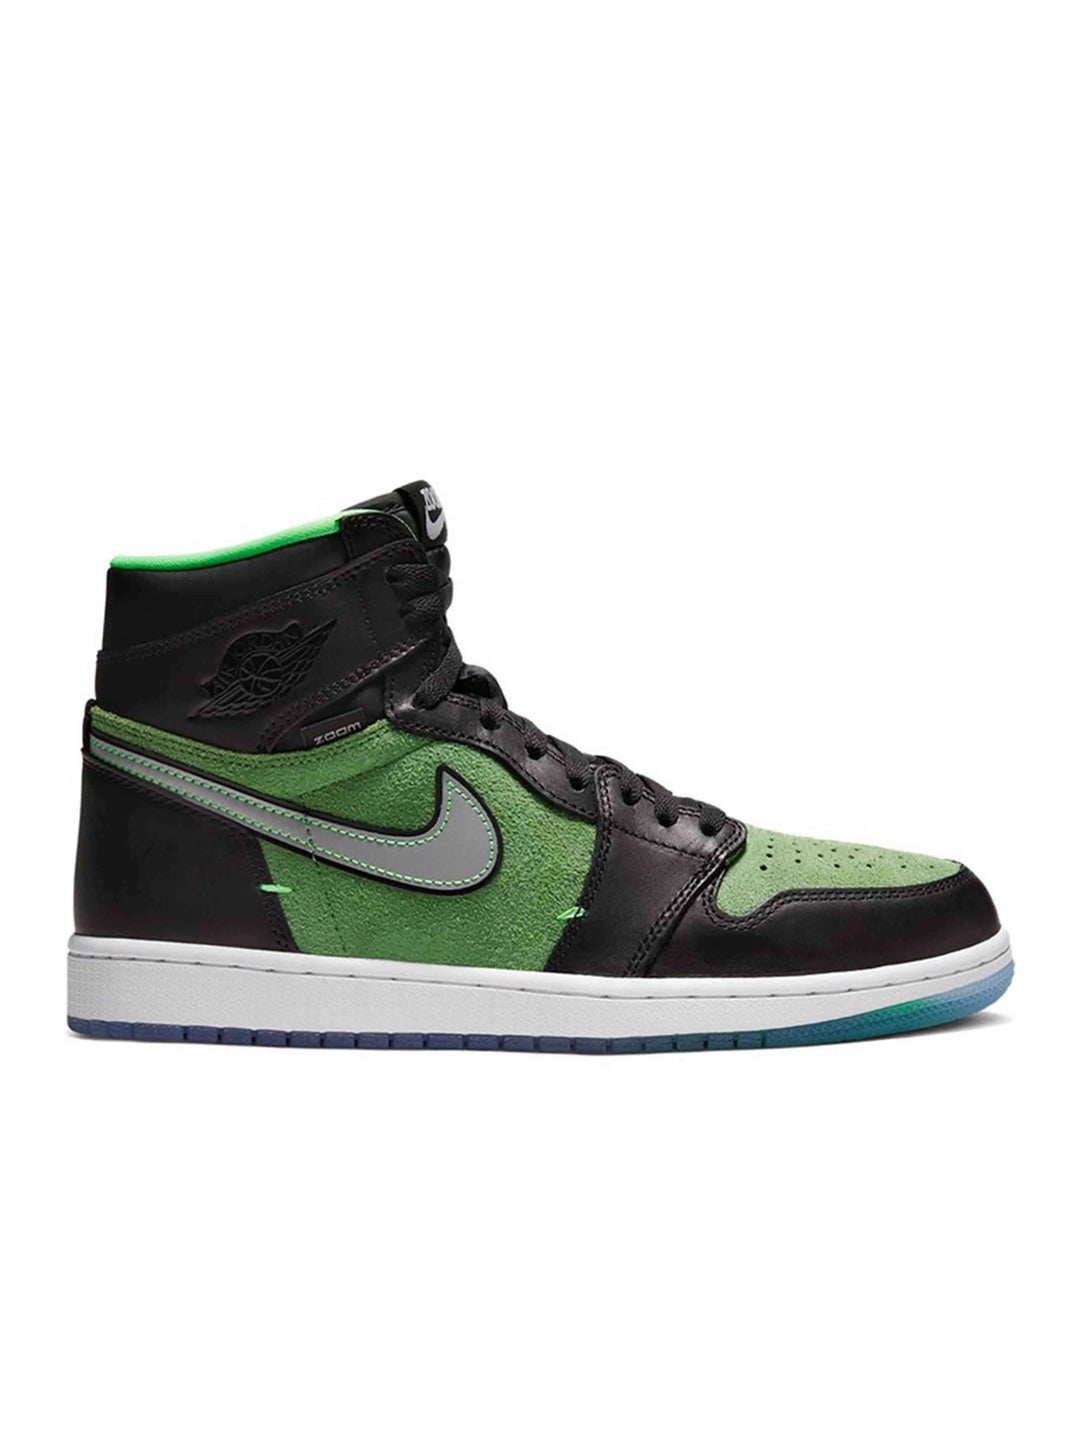 Nike Air Jordan 1 Retro High Zoom Black Green Jordan Brand